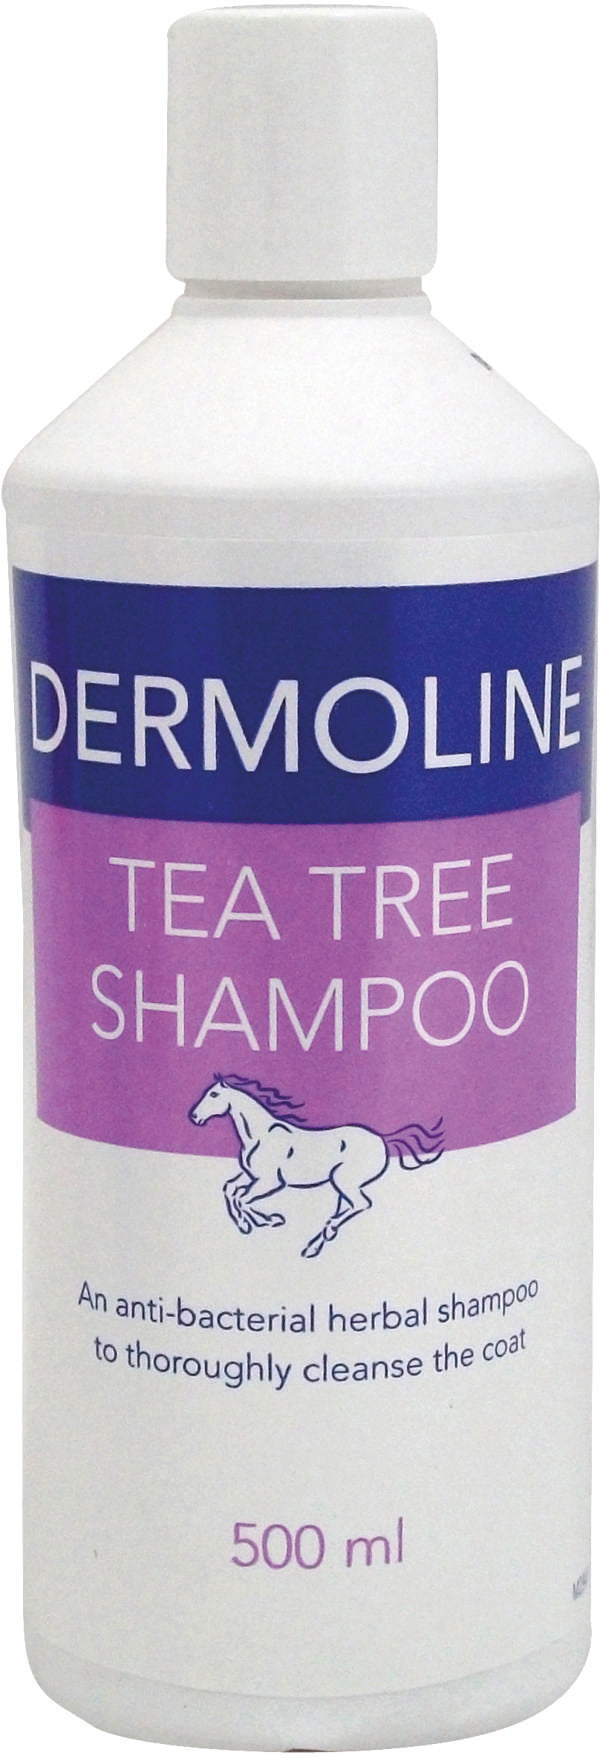 Dermoline Tea Tree Shampoo